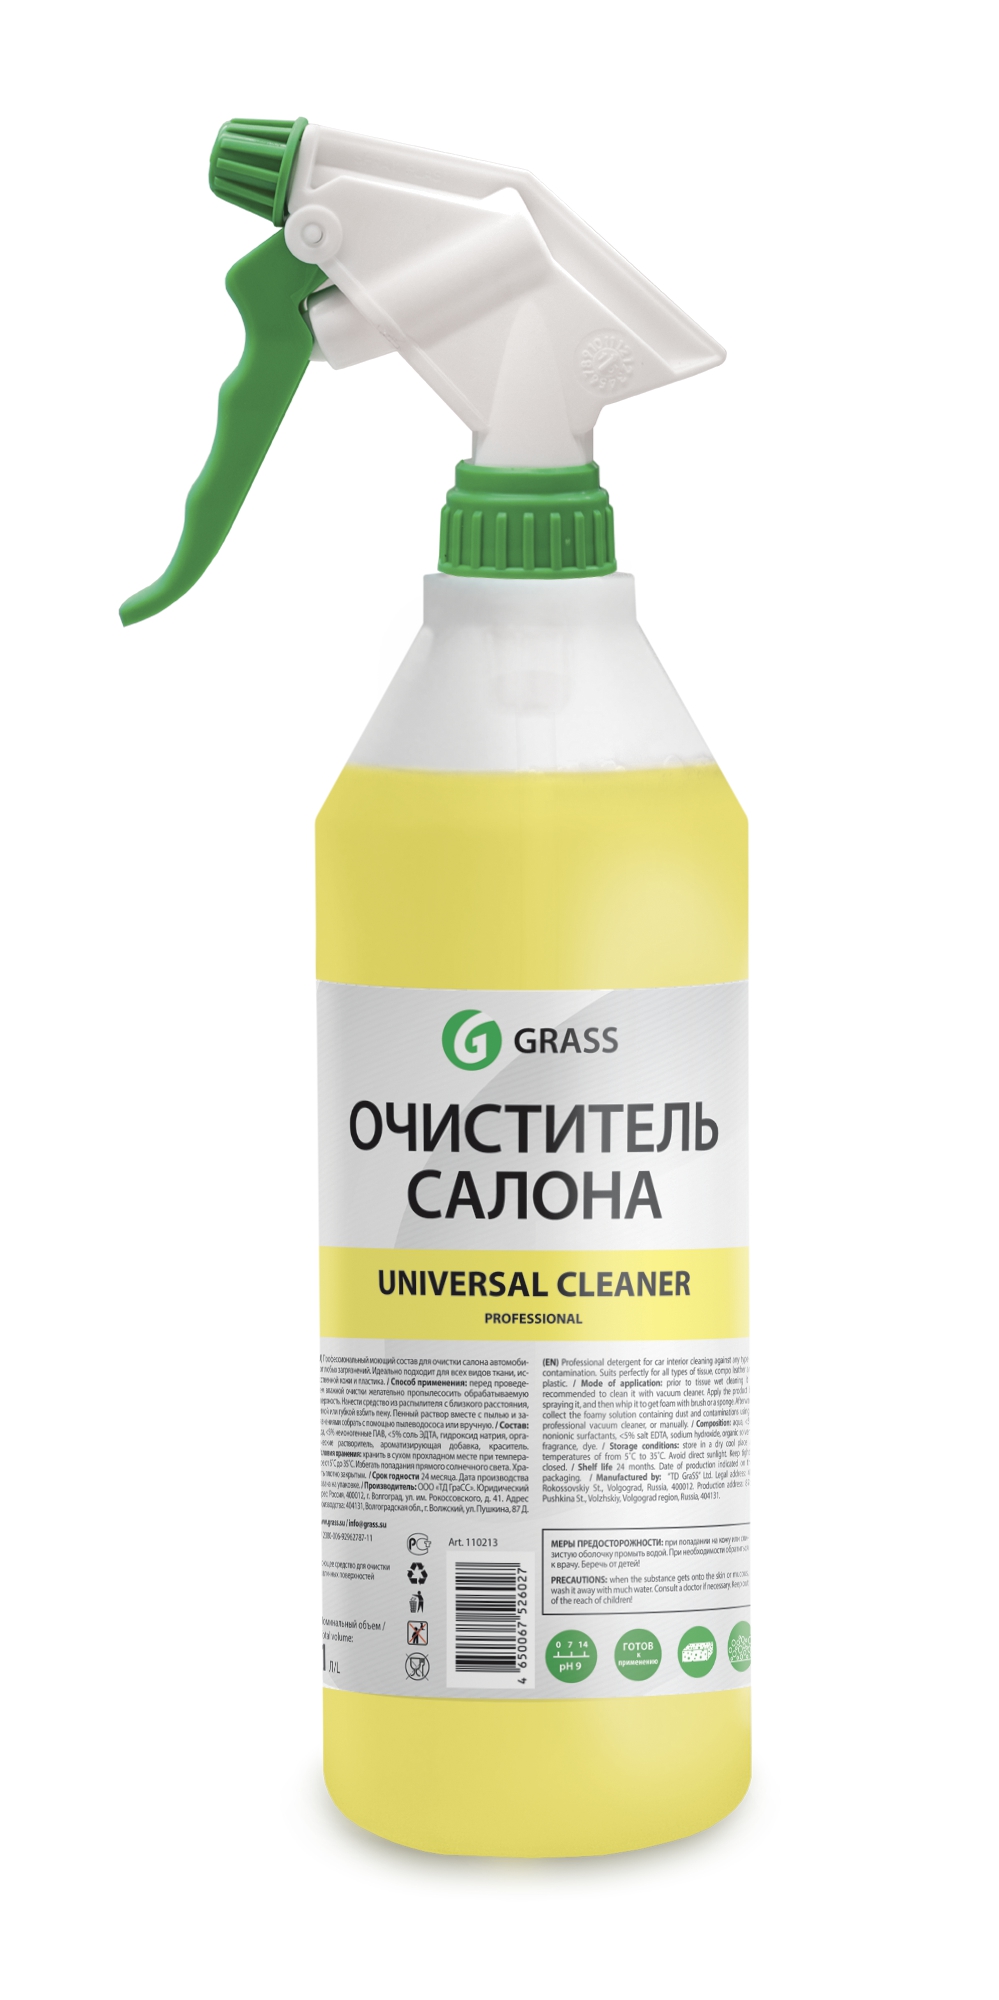 Universal cleaner Очиститель салона 1л professional (с проф. тригером) GRASS Grass  110353_1